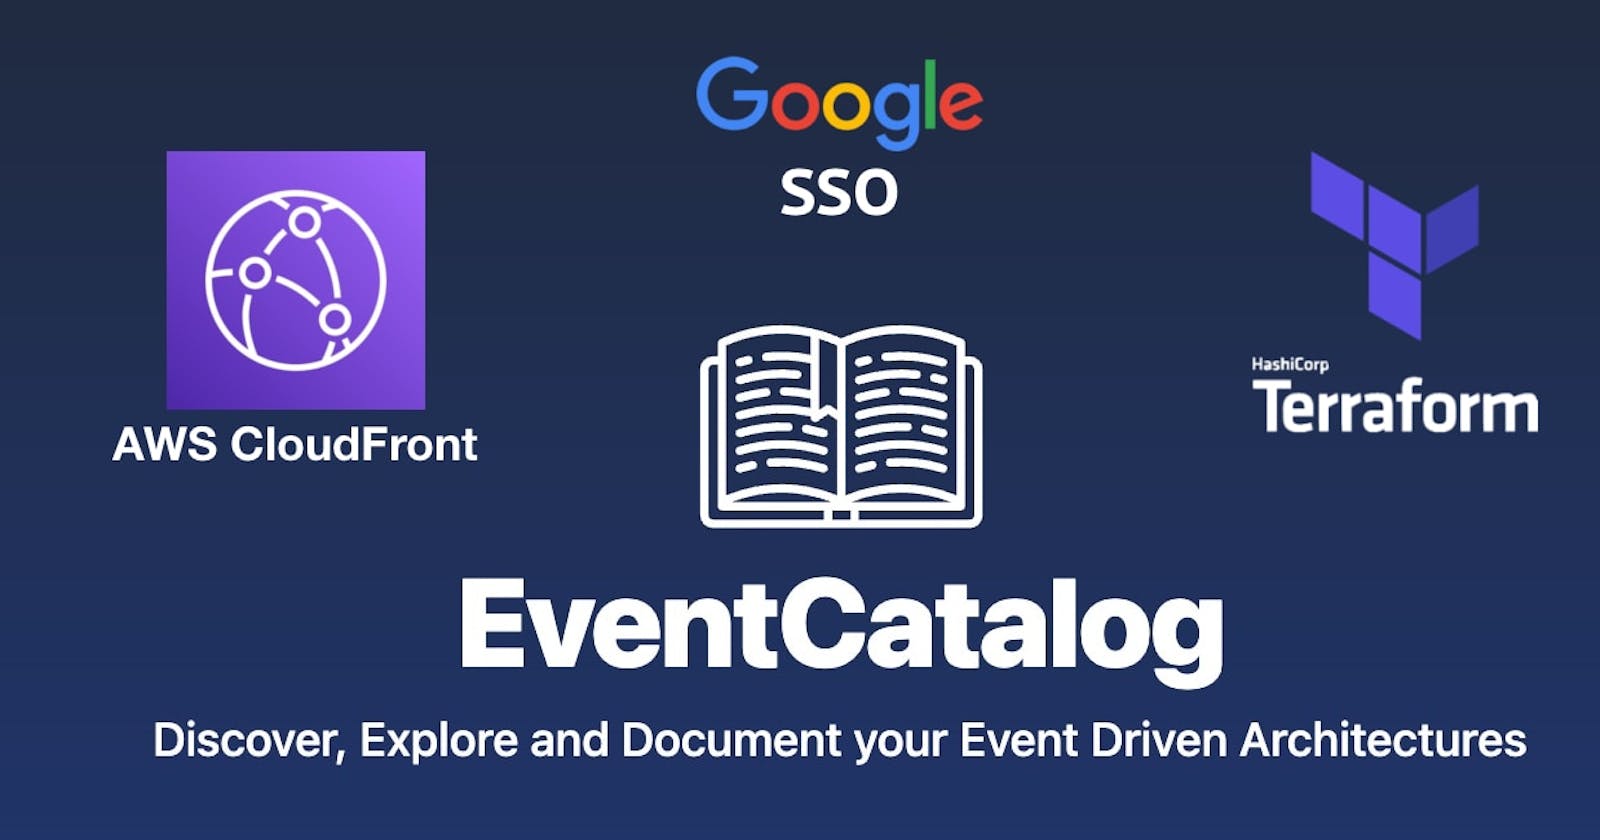 Deploy EventCatalog to AWS CloudFront with Google SSO Access Control via Terraform